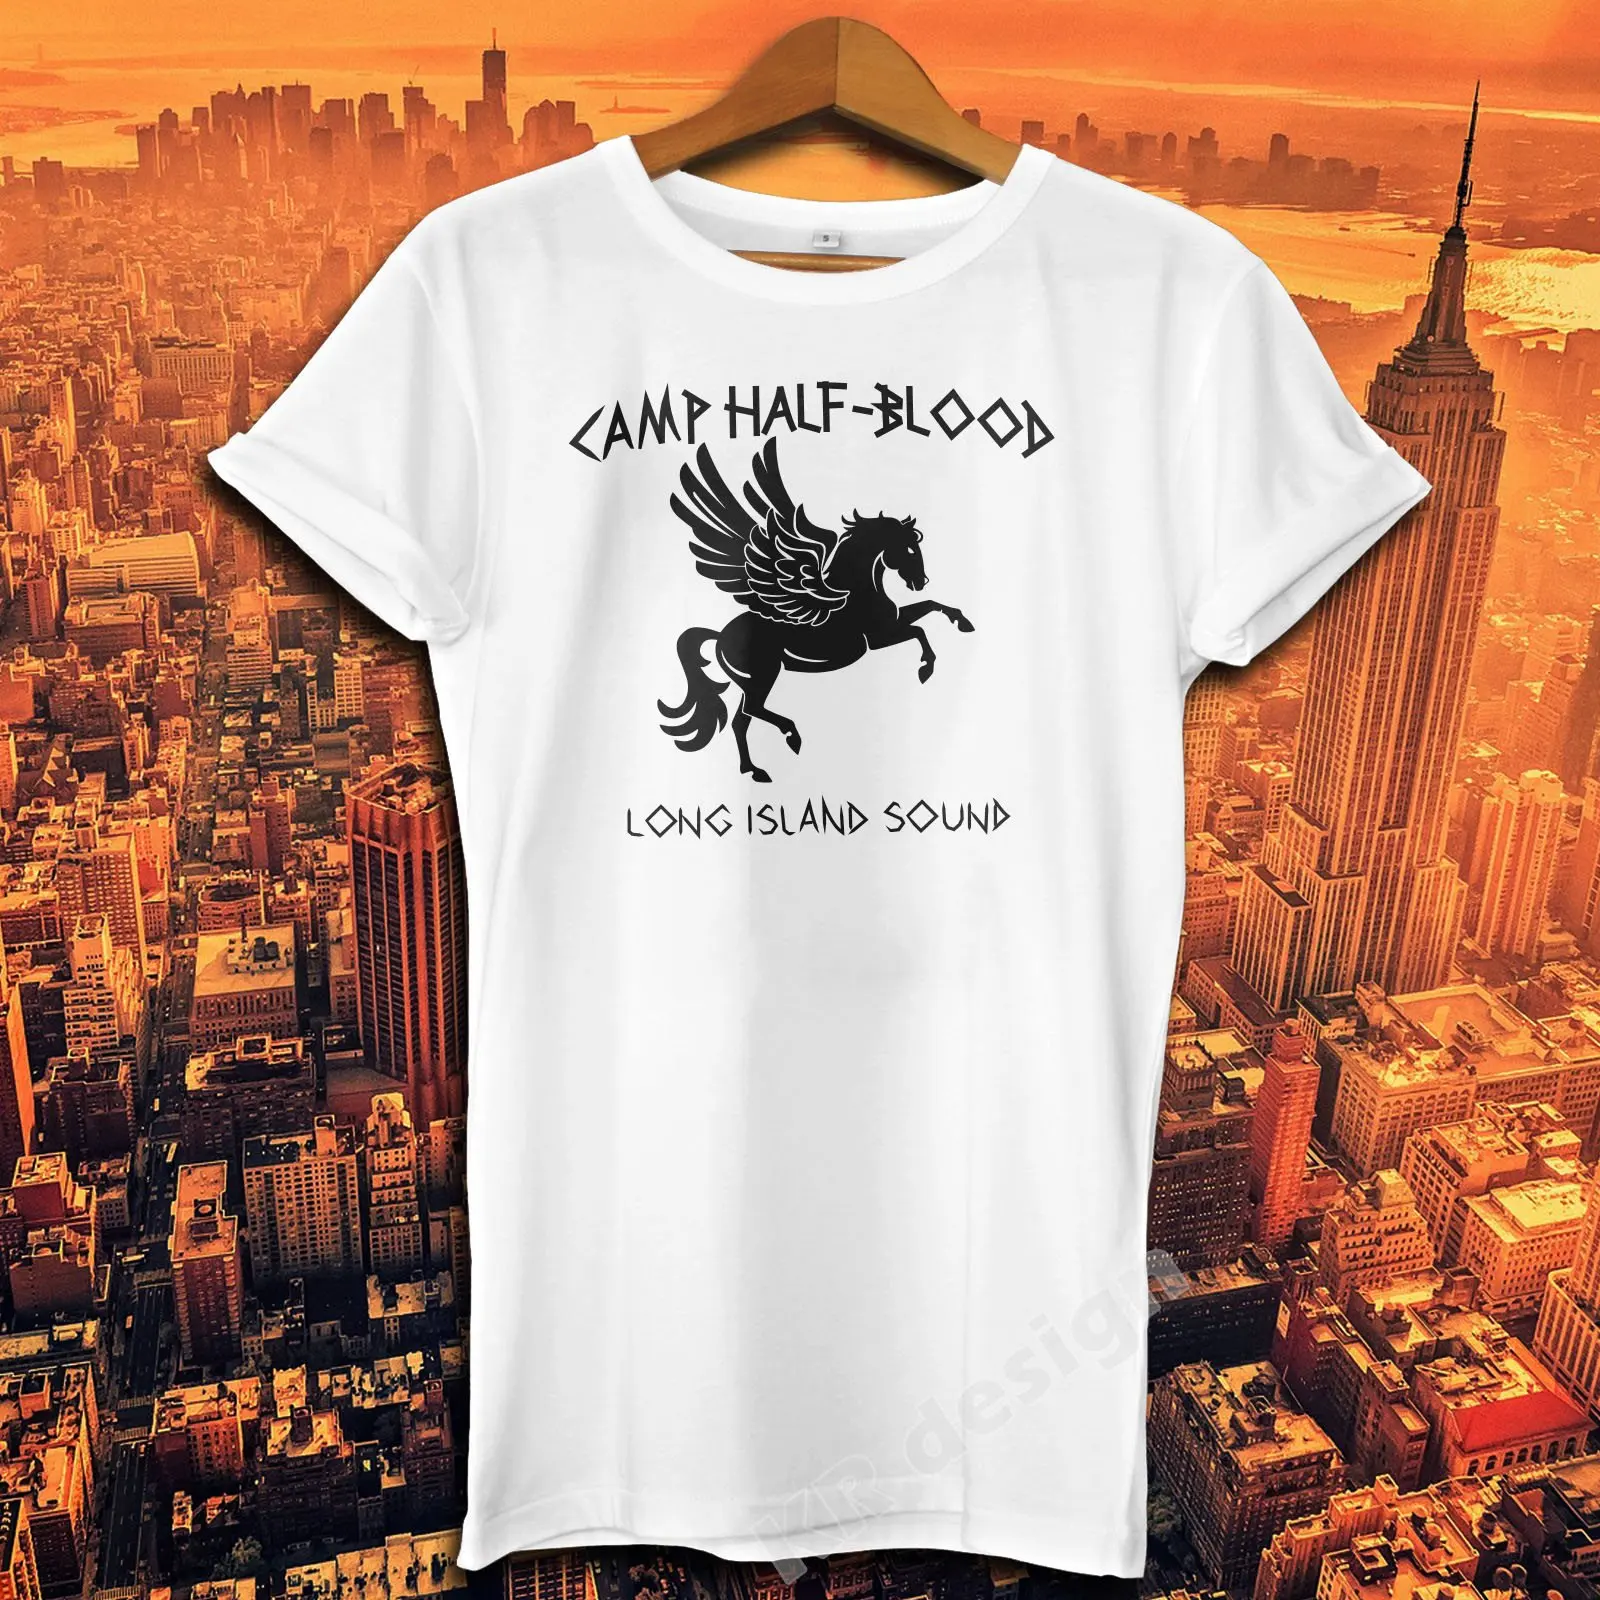 Camp Half Blood T-shirt Percy Jackson Movie Shirt Long Island Sound Greek Demi God Tee shirt Heroes of Olympus Shirt